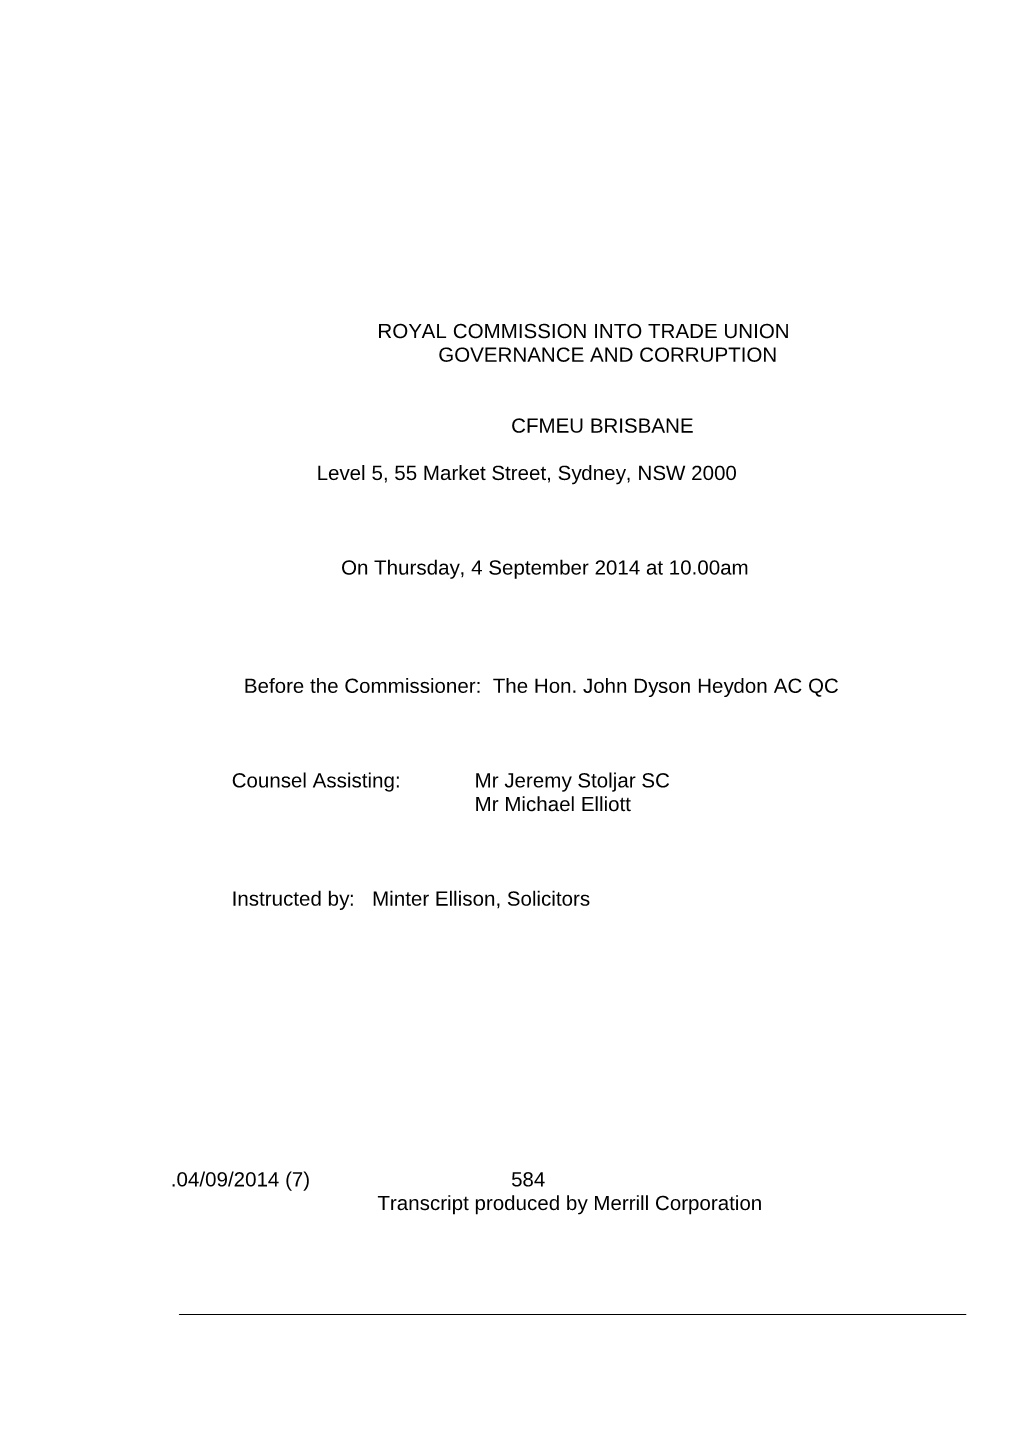 Royal Commission Into Trade Union Governance and Corruption CFMEU Brisbane 4 September 2014